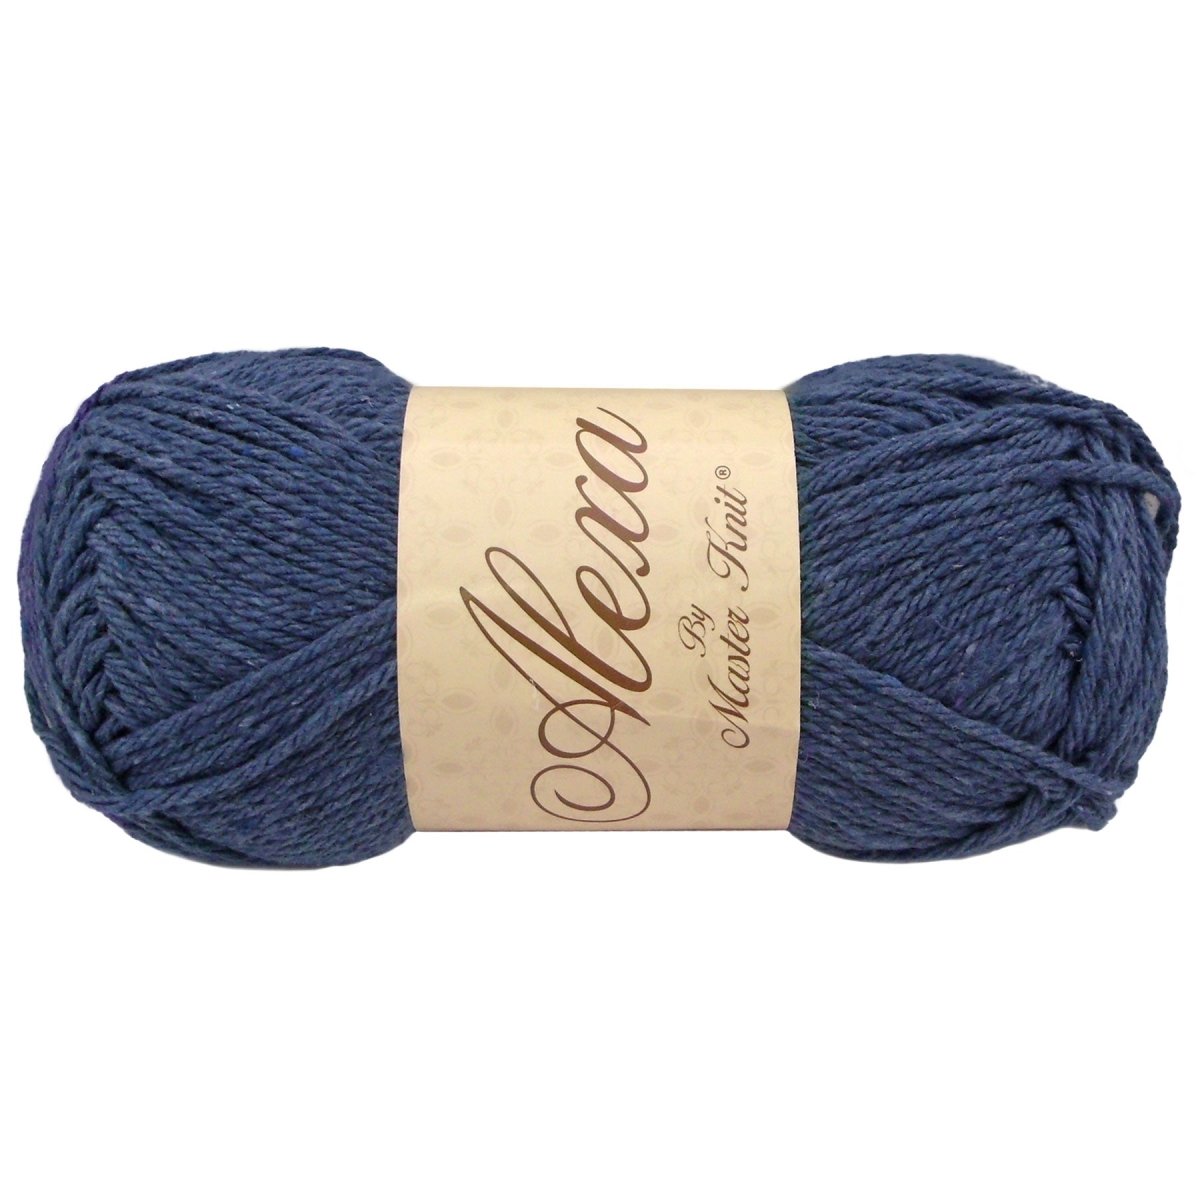 ALEXA - Crochetstores9340-194